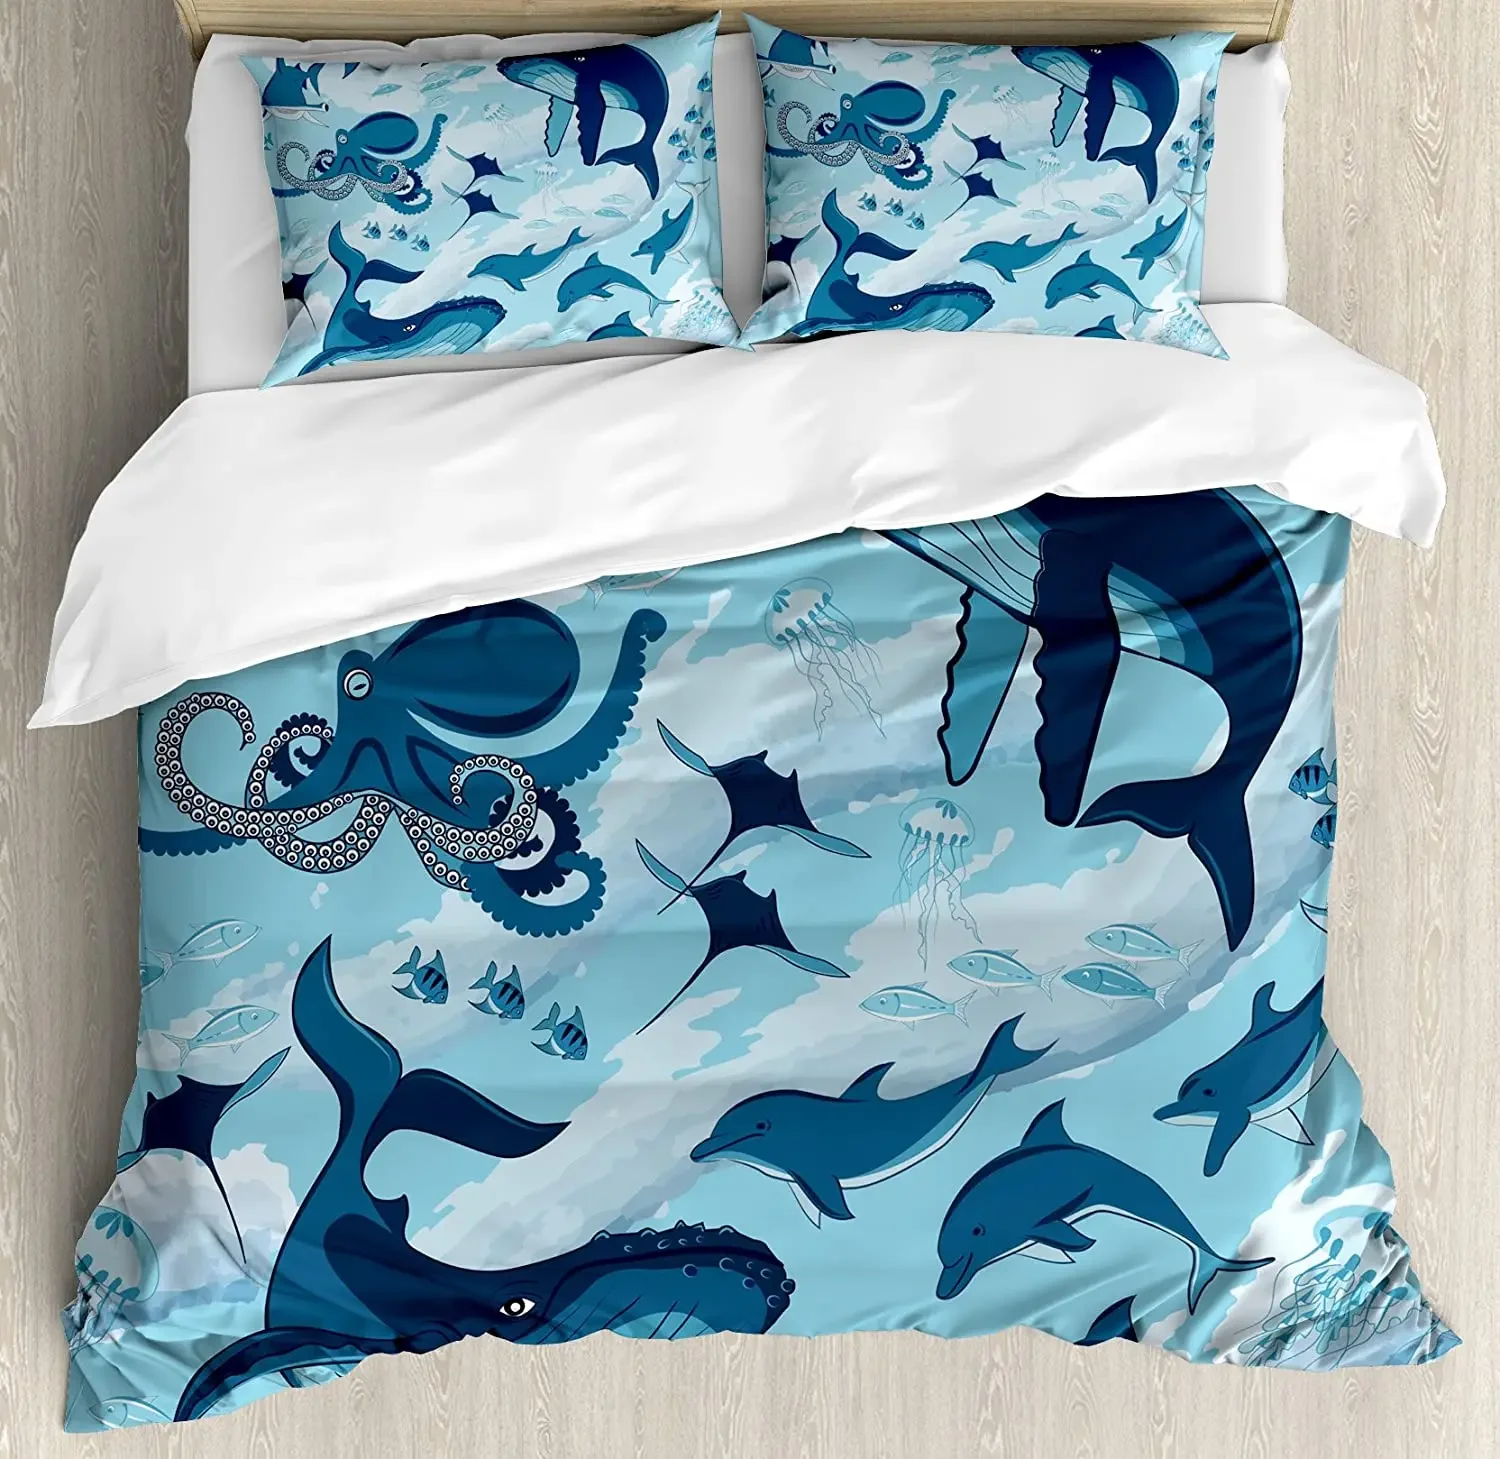 shark-bedding-set-for-bedroom-bed-home-inhabitants-of-ocean-sharks-whales-dolphins-octopus-duvet-cover-quilt-cover-pillowcase